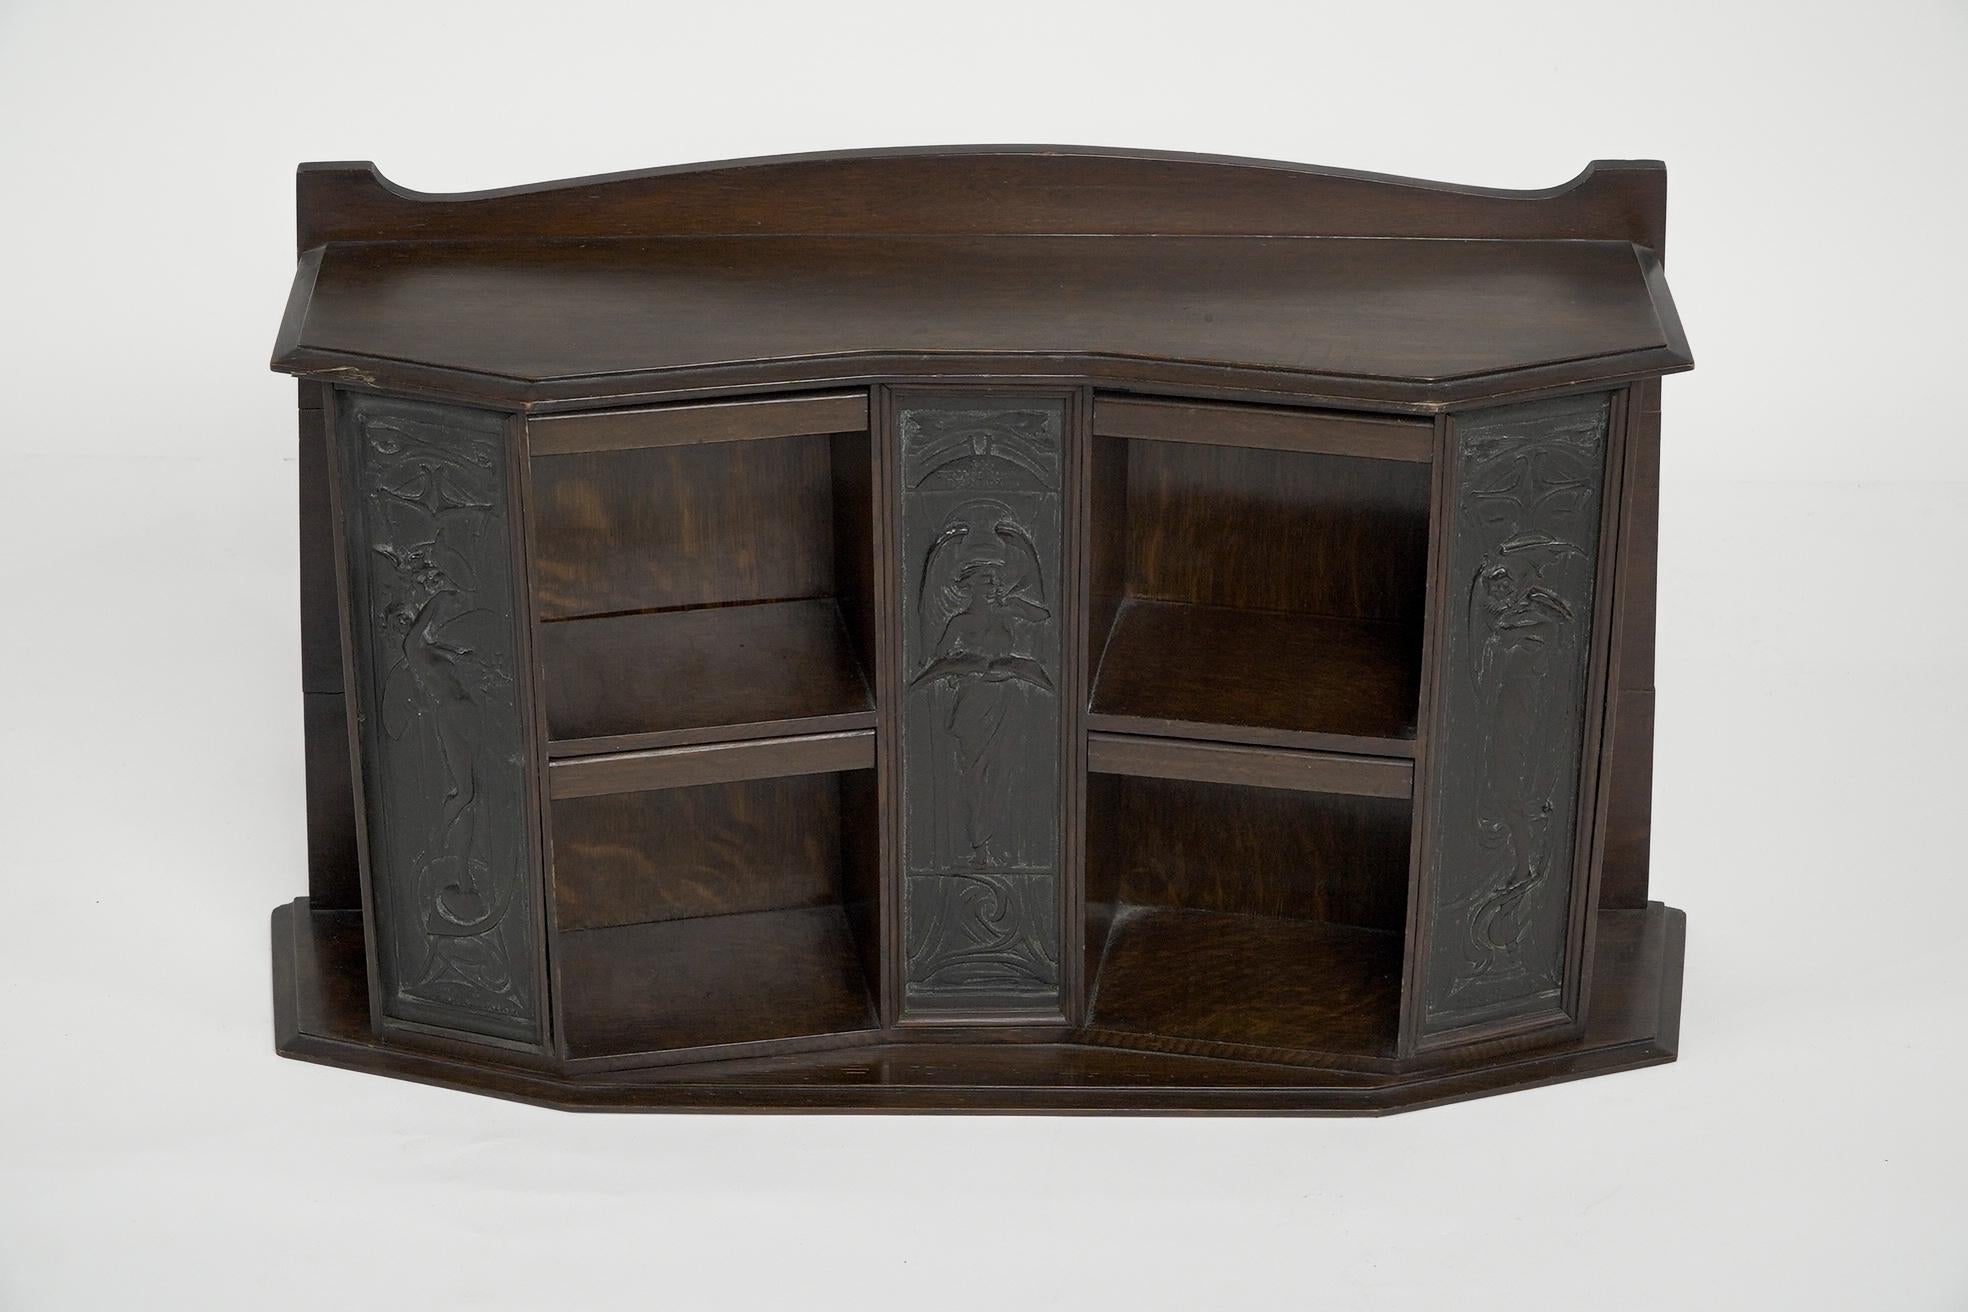 English Arts and Crafts oak desk top bookcase with 3 bronze Art Nouveau period plaques. For Sale